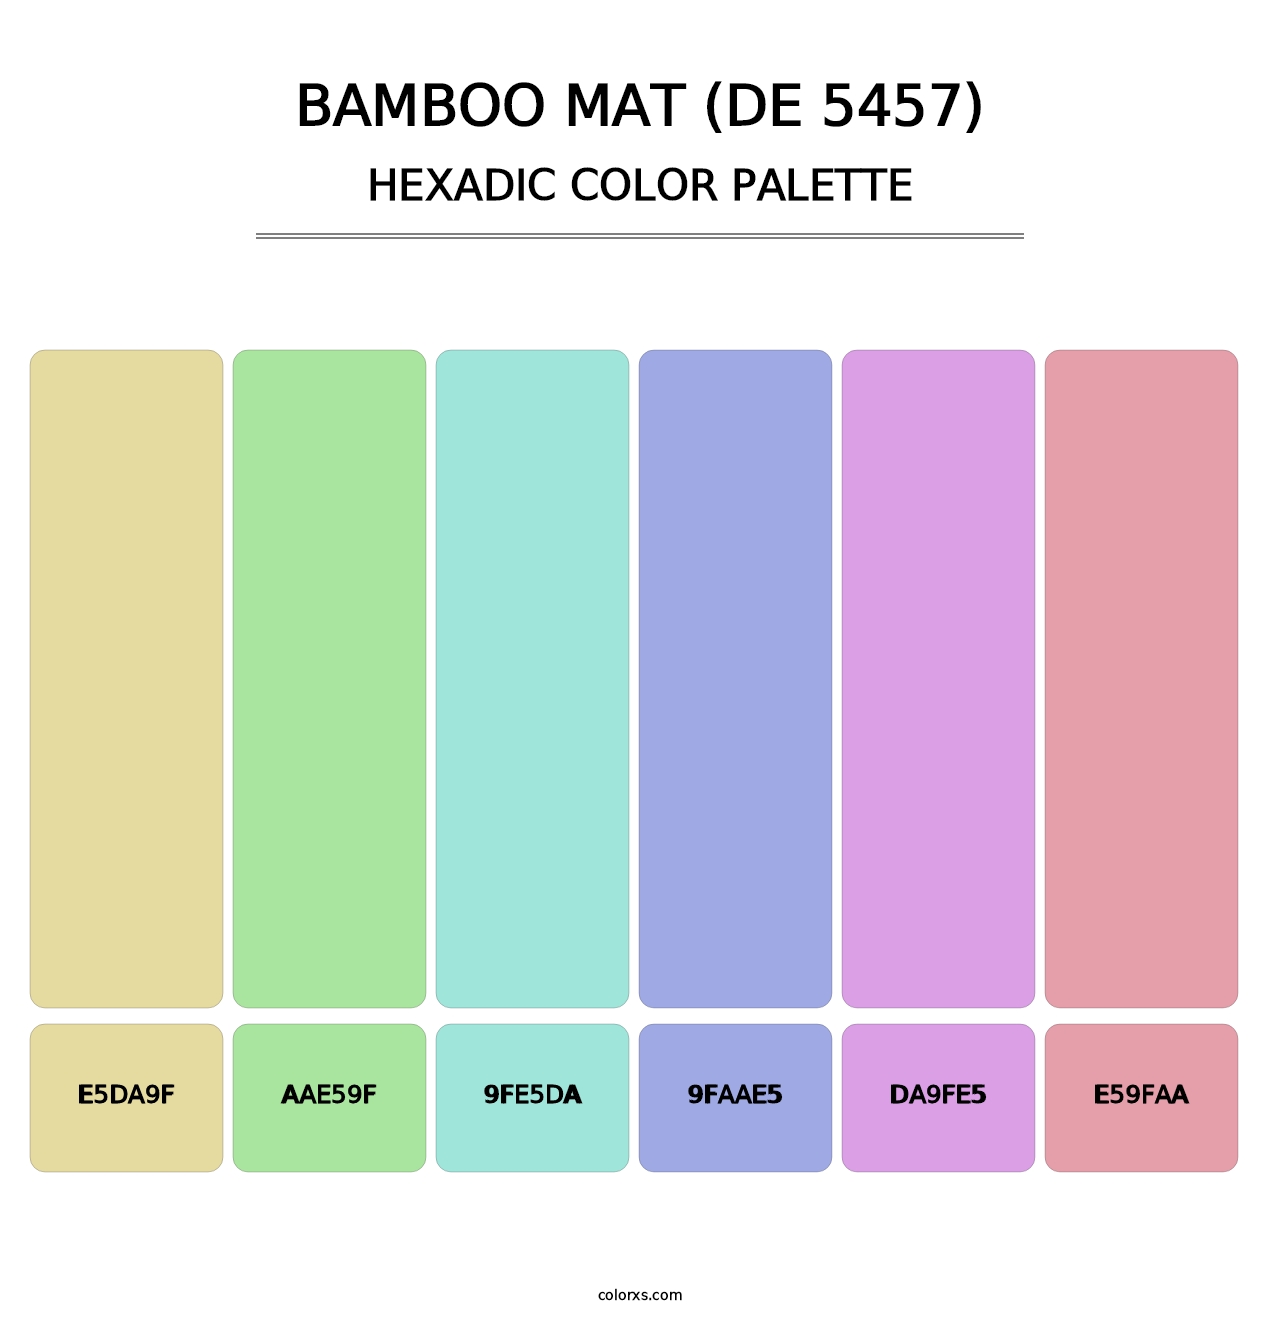 Bamboo Mat (DE 5457) - Hexadic Color Palette